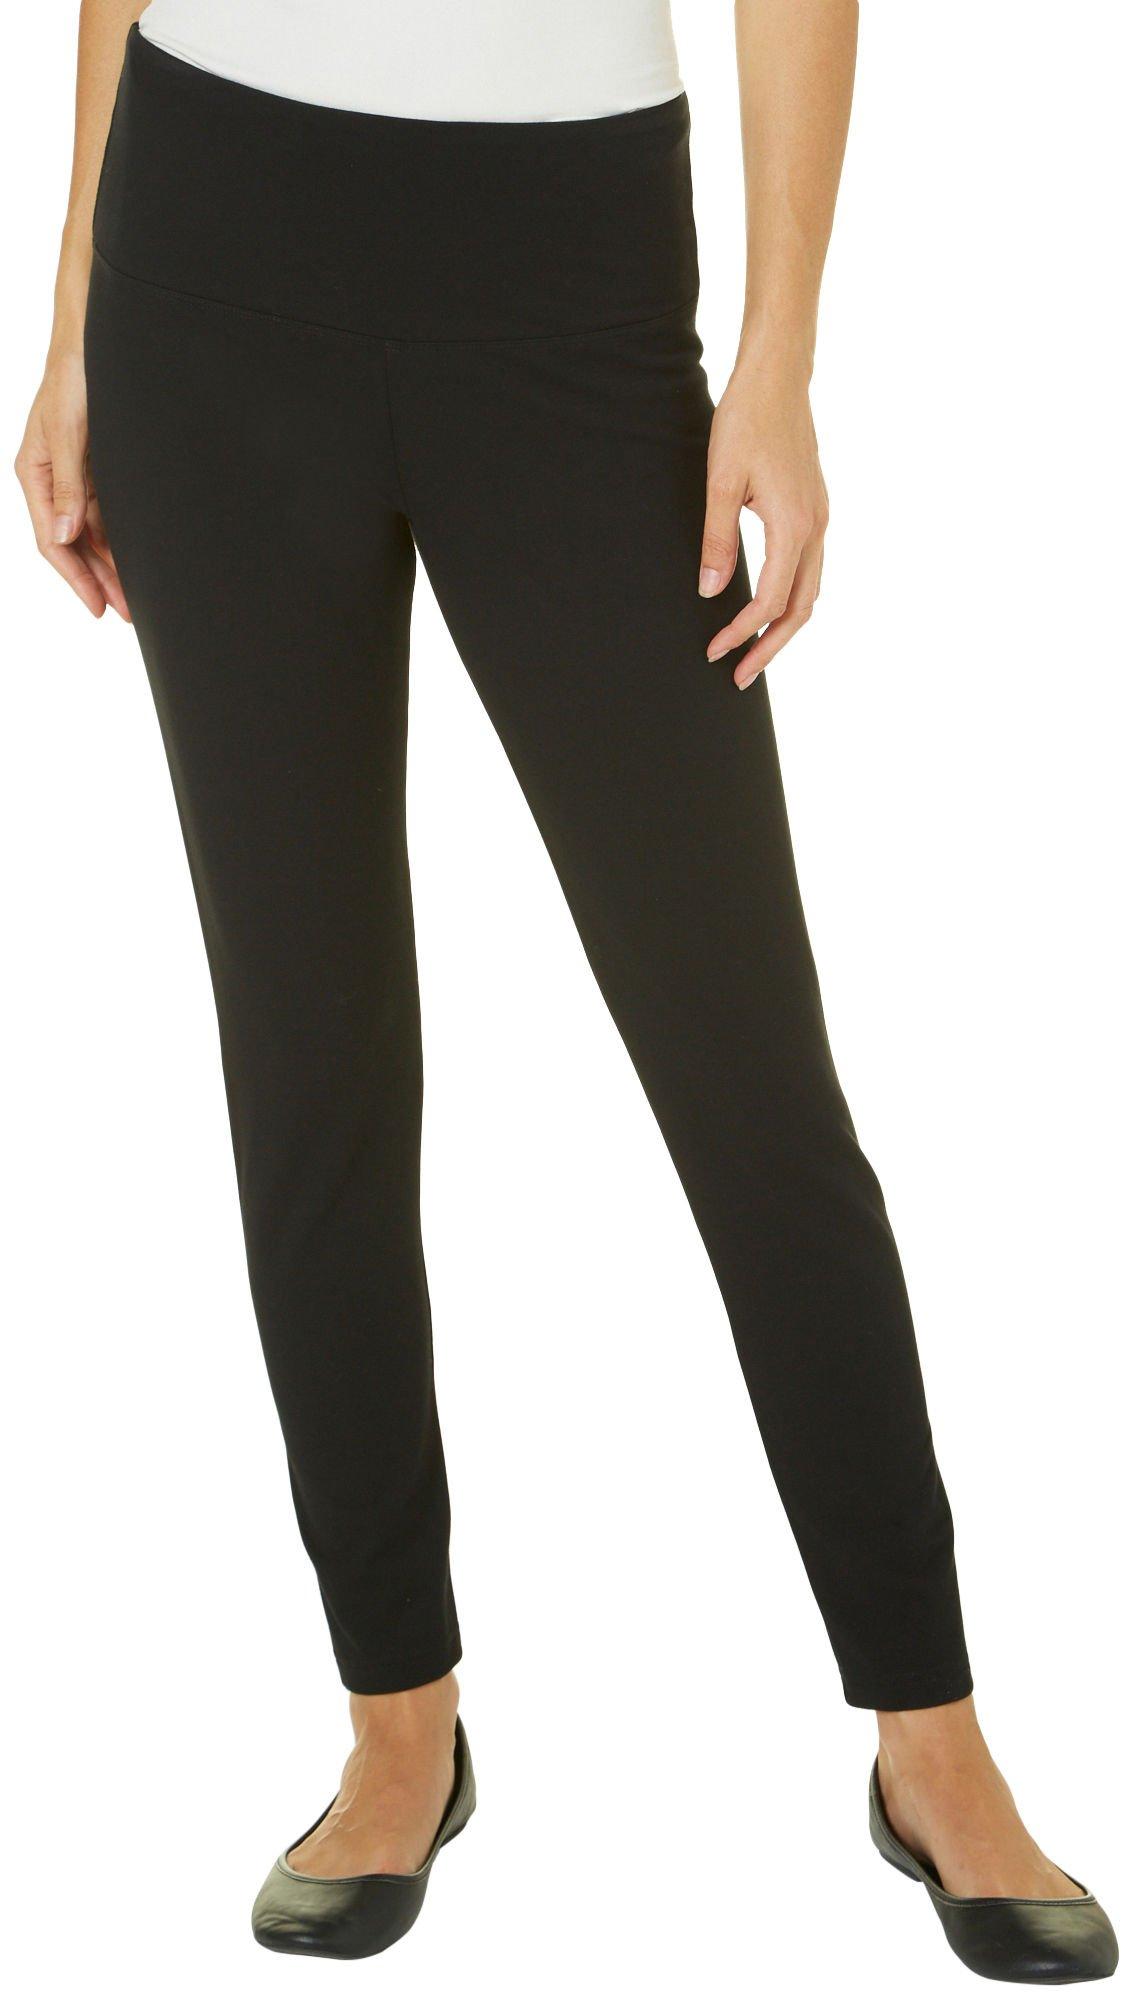 Khakis & Co Womens Suave Solid Leggings Large Black | eBay